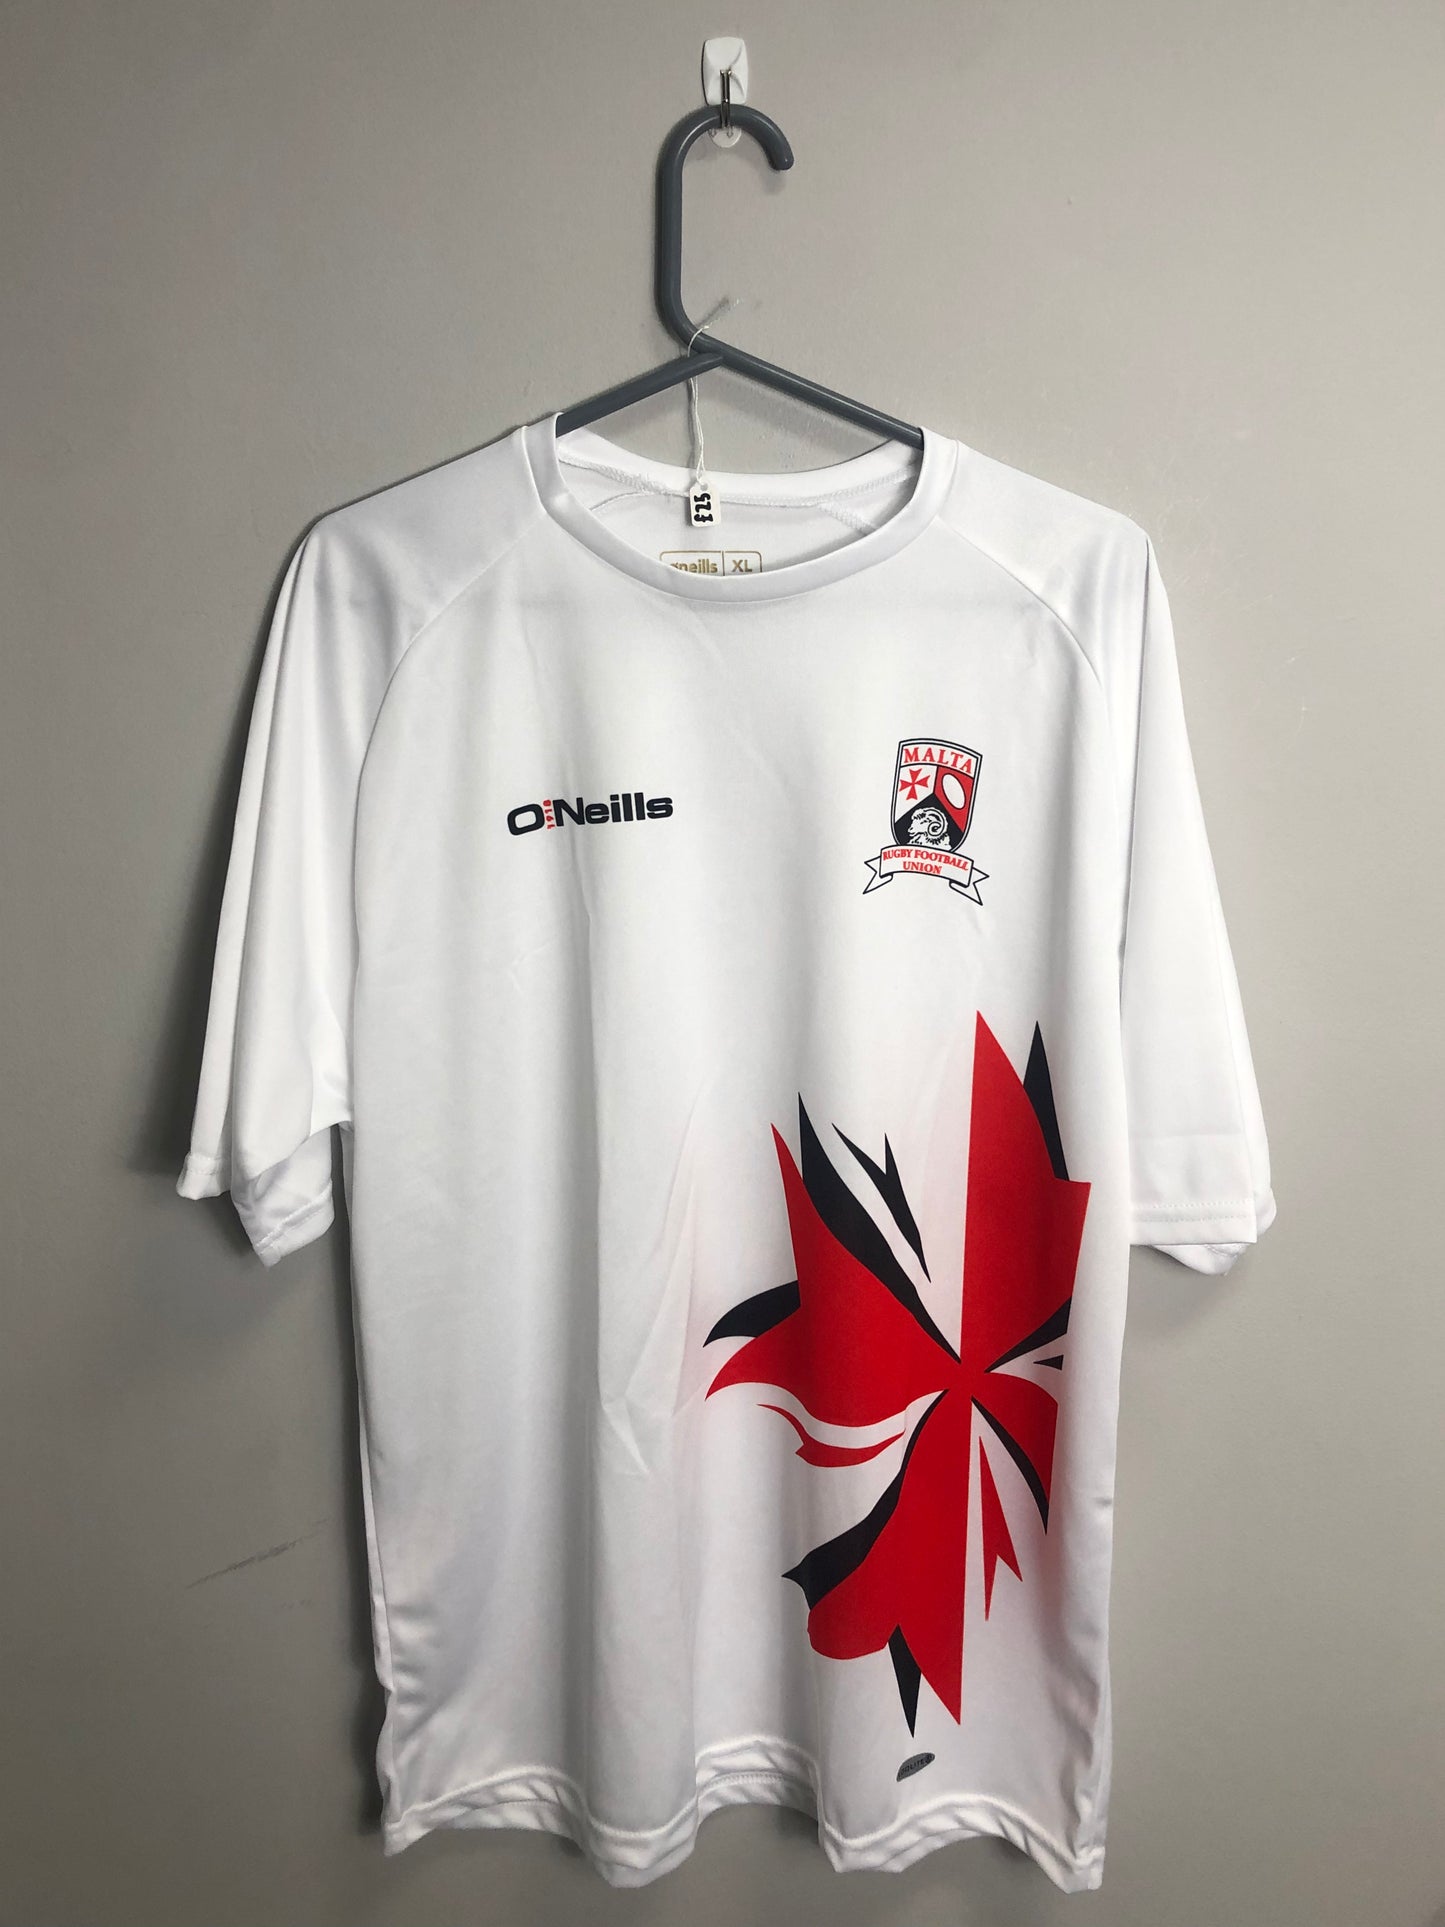 Malta Rugby National Team Shirt - 45” Chest - XL